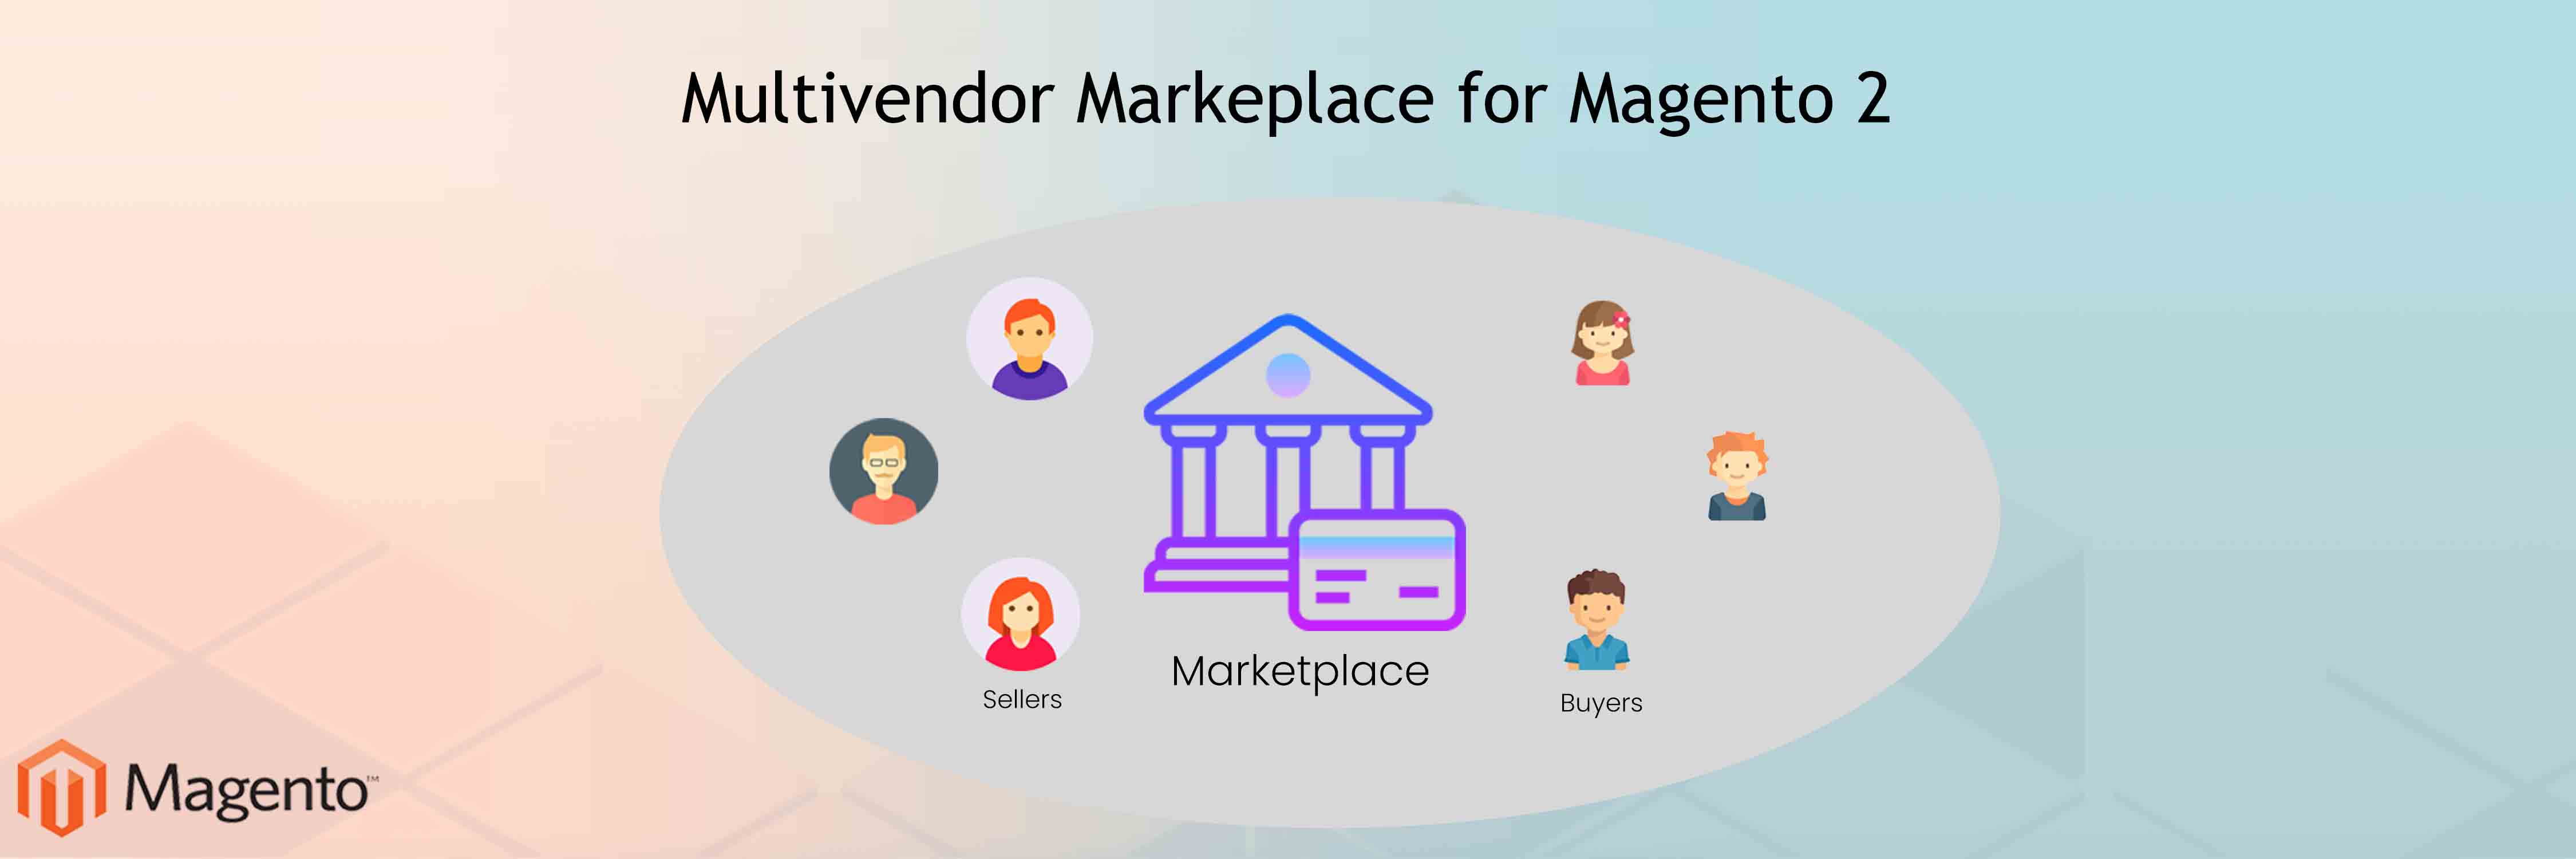 Multivendor Marketplace for Magento 2